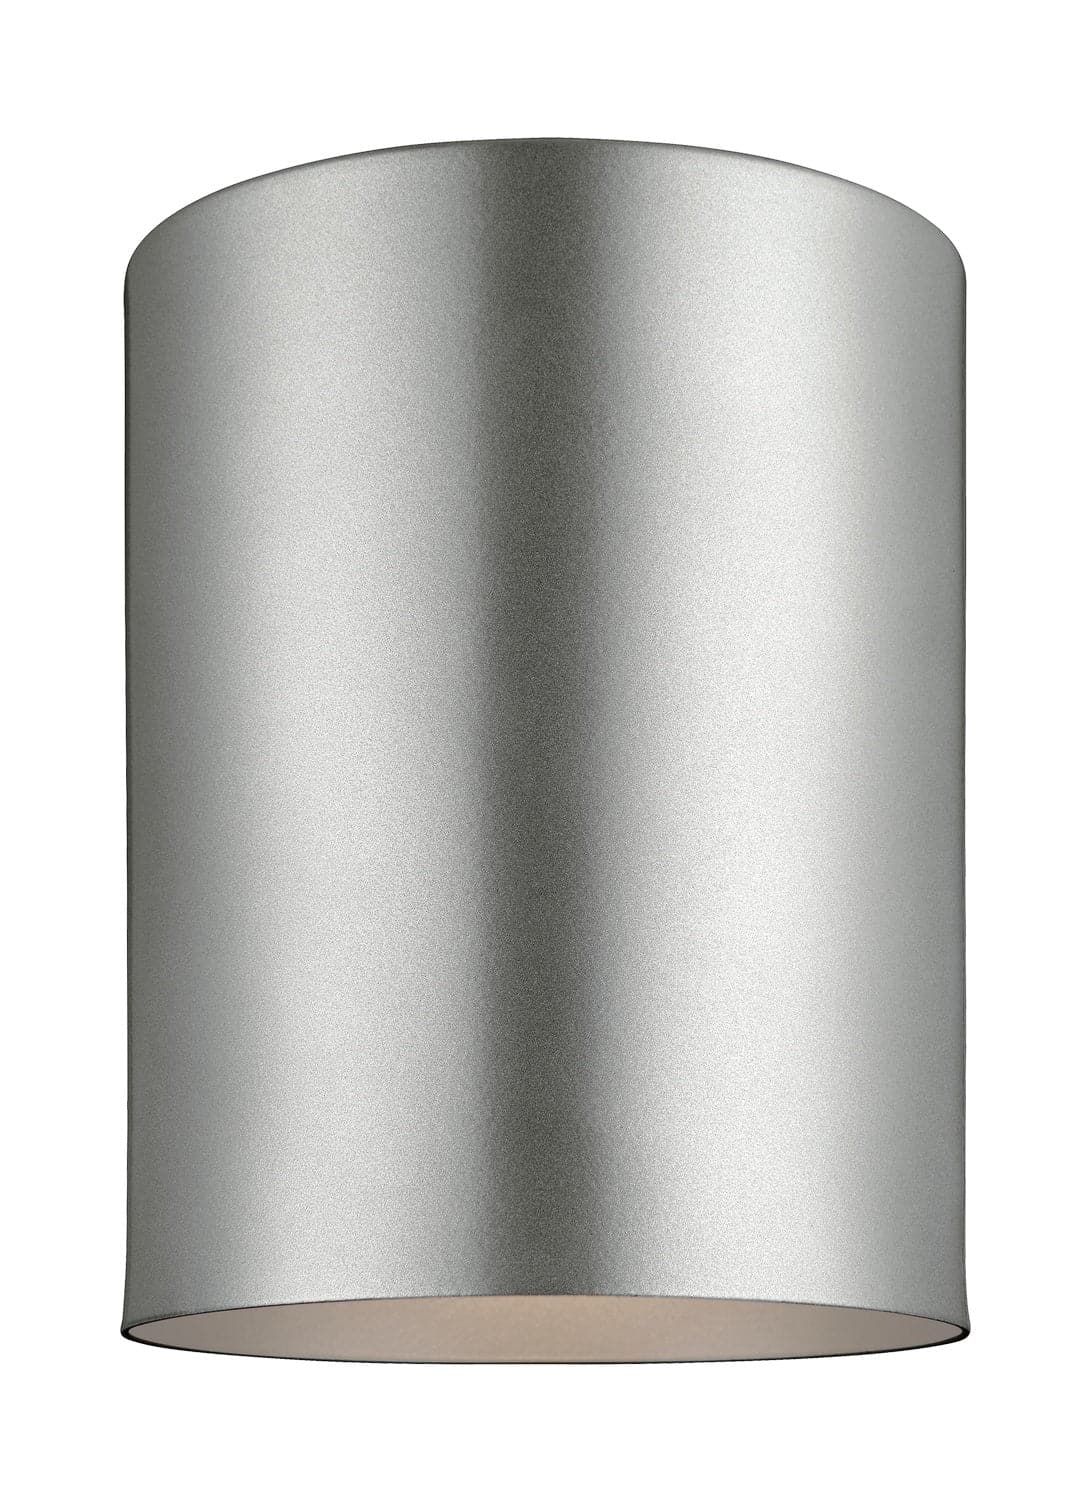 Visual Comfort Studio - 7813801-753 - One Light Outdoor Flush Mount - Outdoor Cylinders - Painted Brushed Nickel